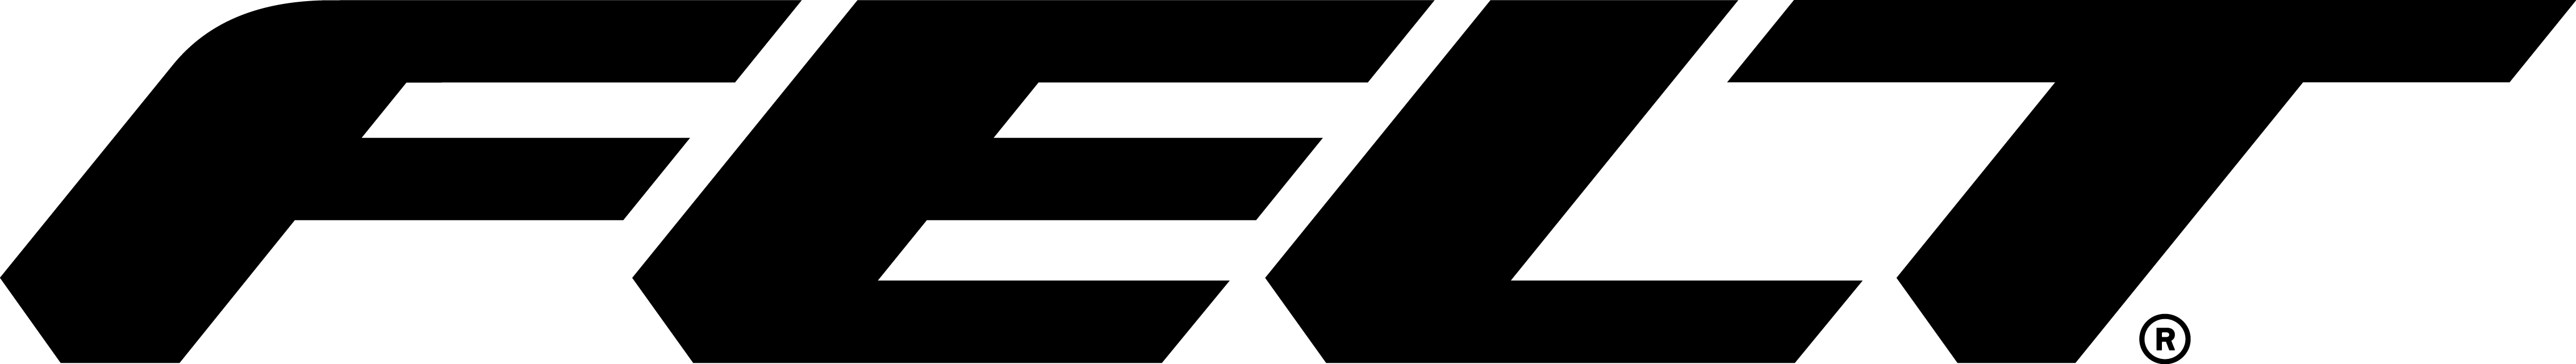 2016 Logo_BLK